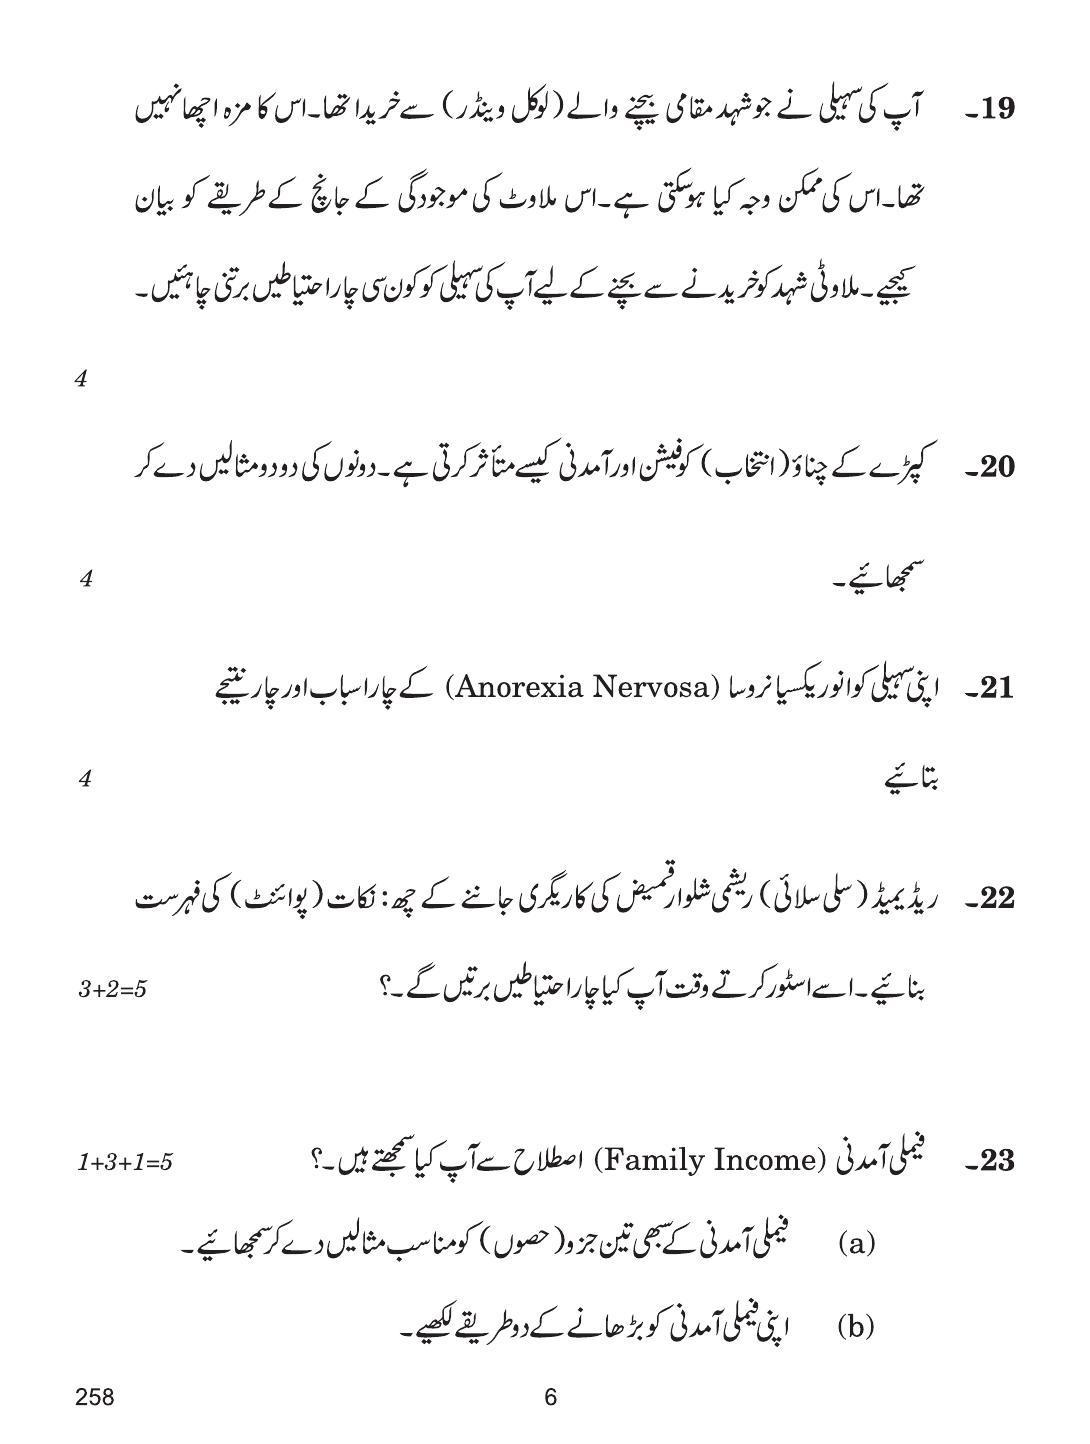 CBSE Class 12 258 (Home Science Urdu) 2018 Question Paper - Page 6